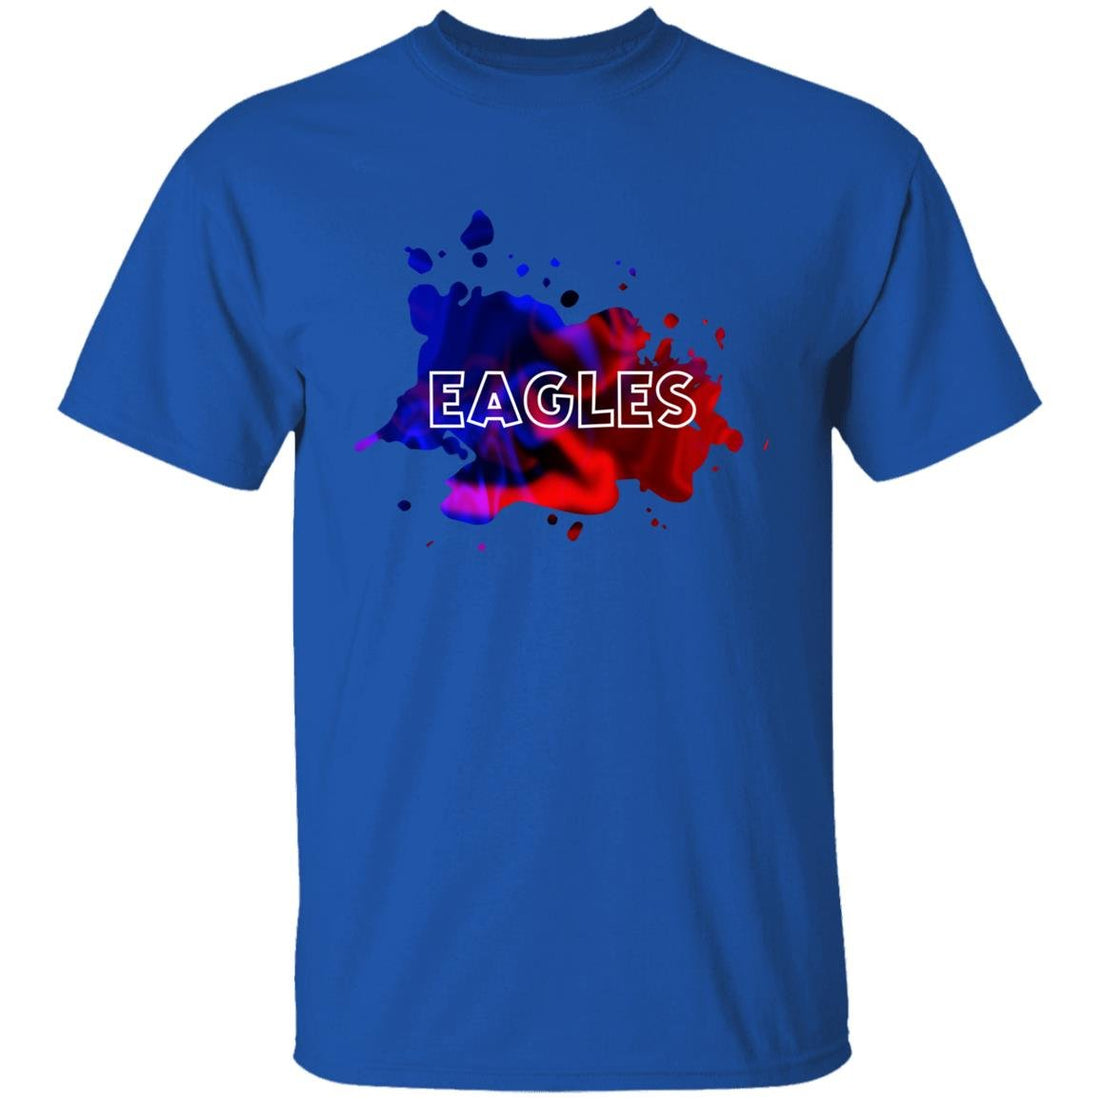 Eagles Splash Youth T-Shirt - T-Shirts - Positively Sassy - Eagles Splash Youth T-Shirt